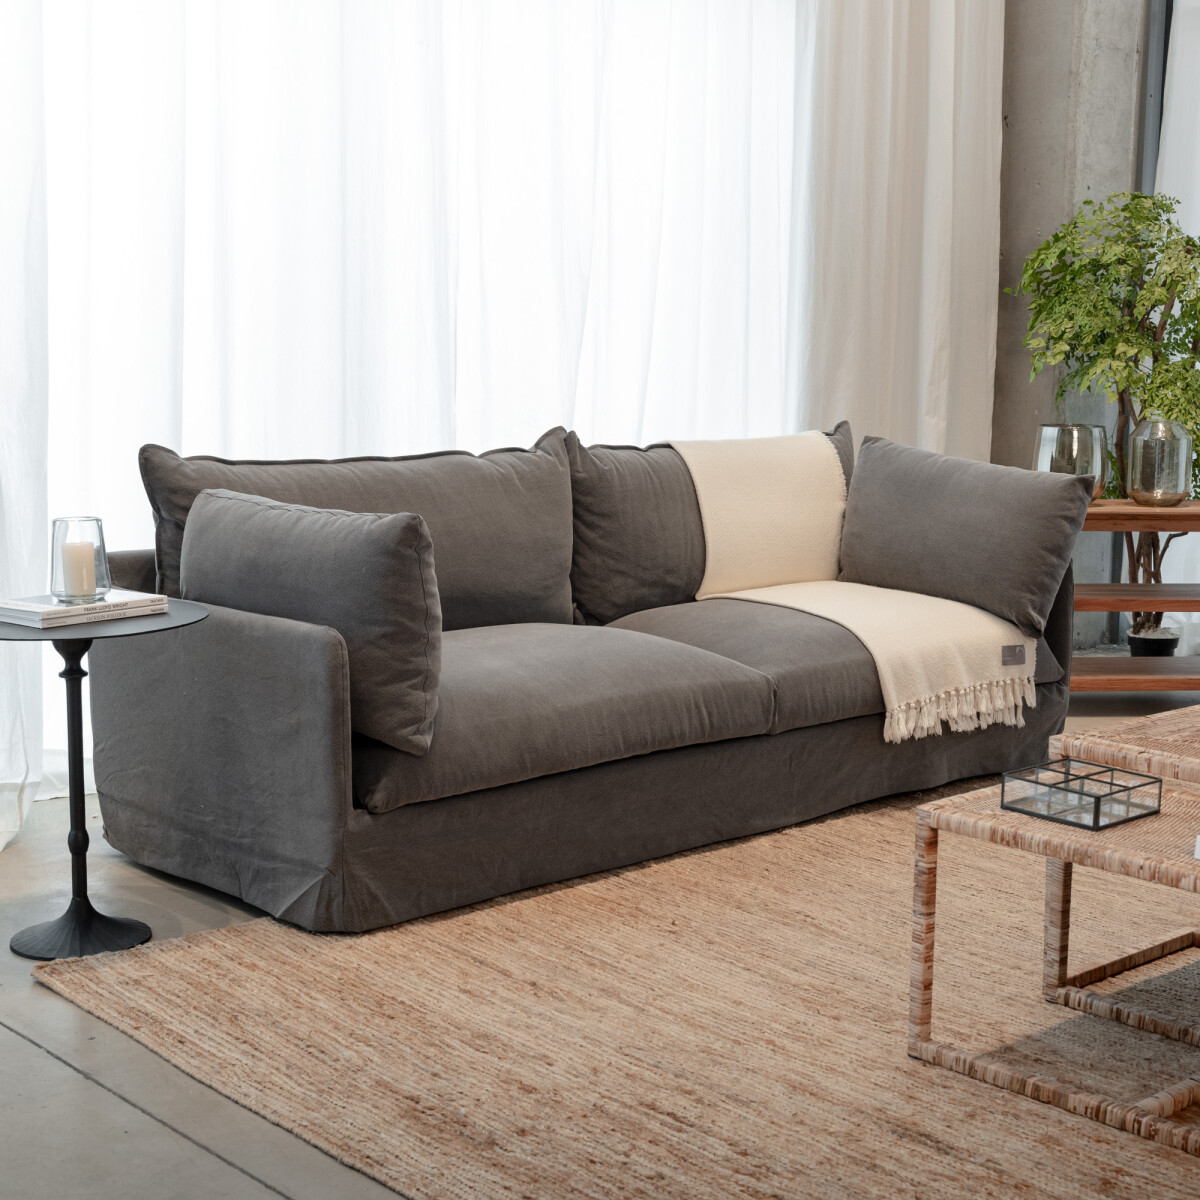 sofa jade gris, 2.30 m 